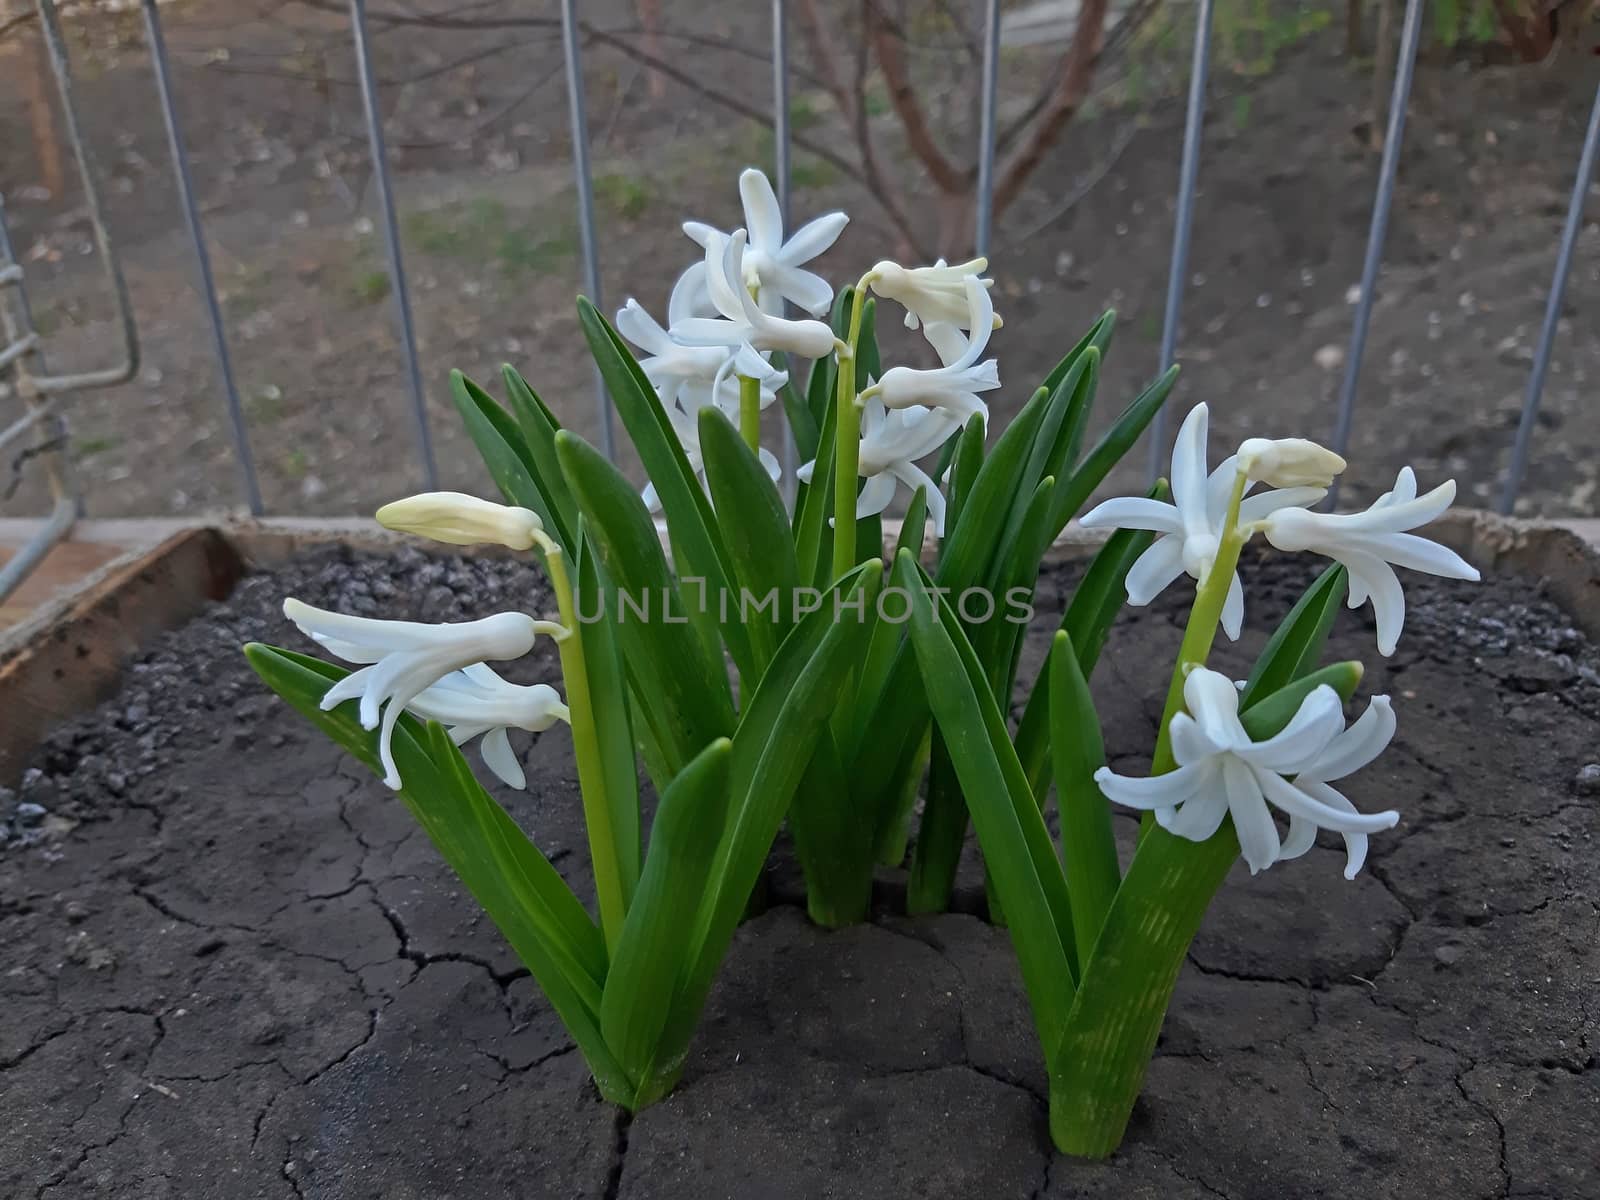 White hyacinths in bloom very beautiful flowers by Mindru